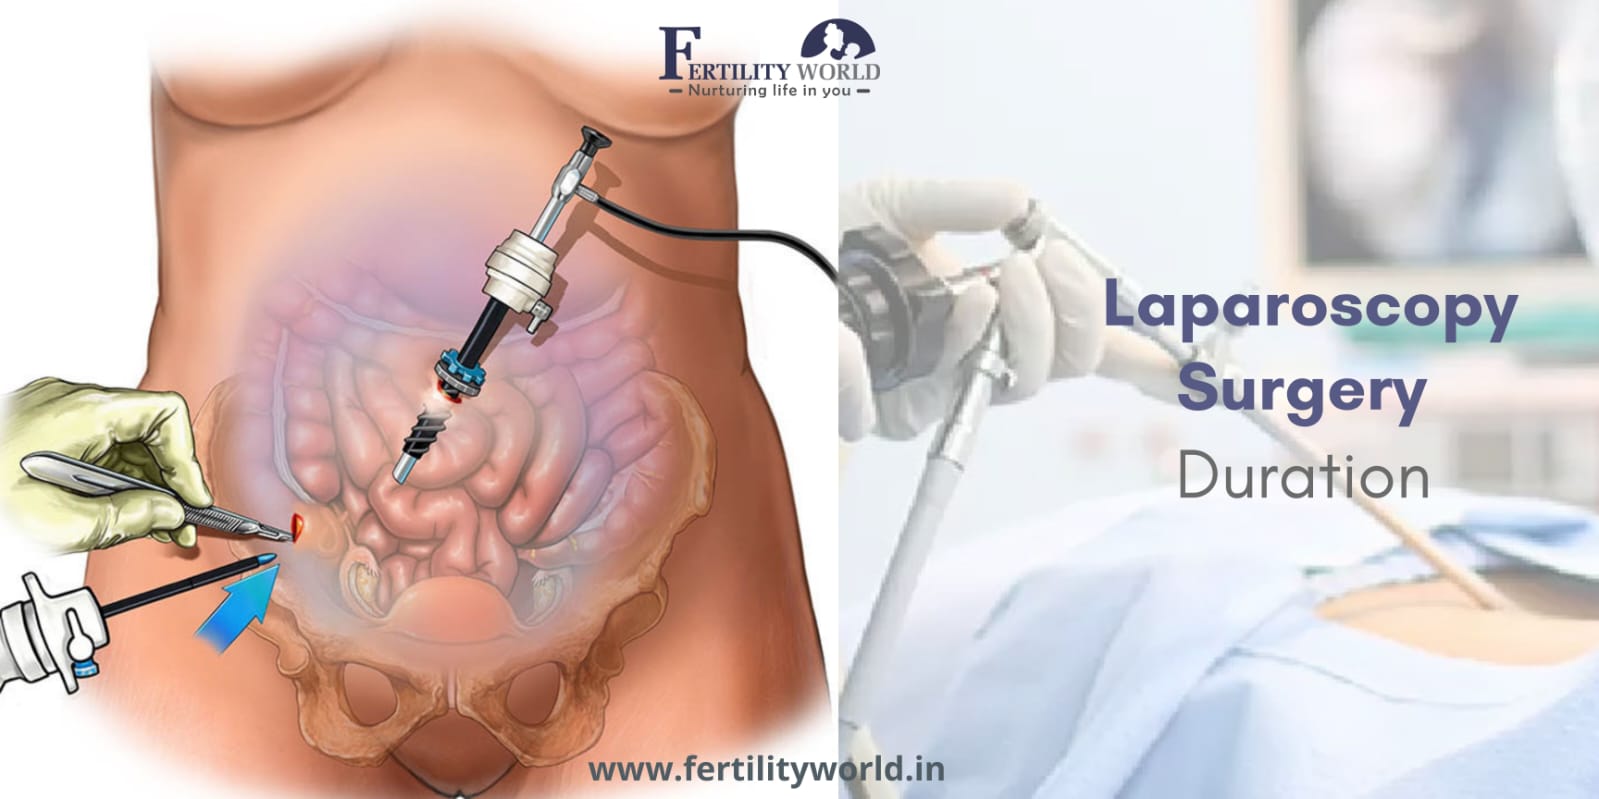 How long does a laparoscopic surgery take?